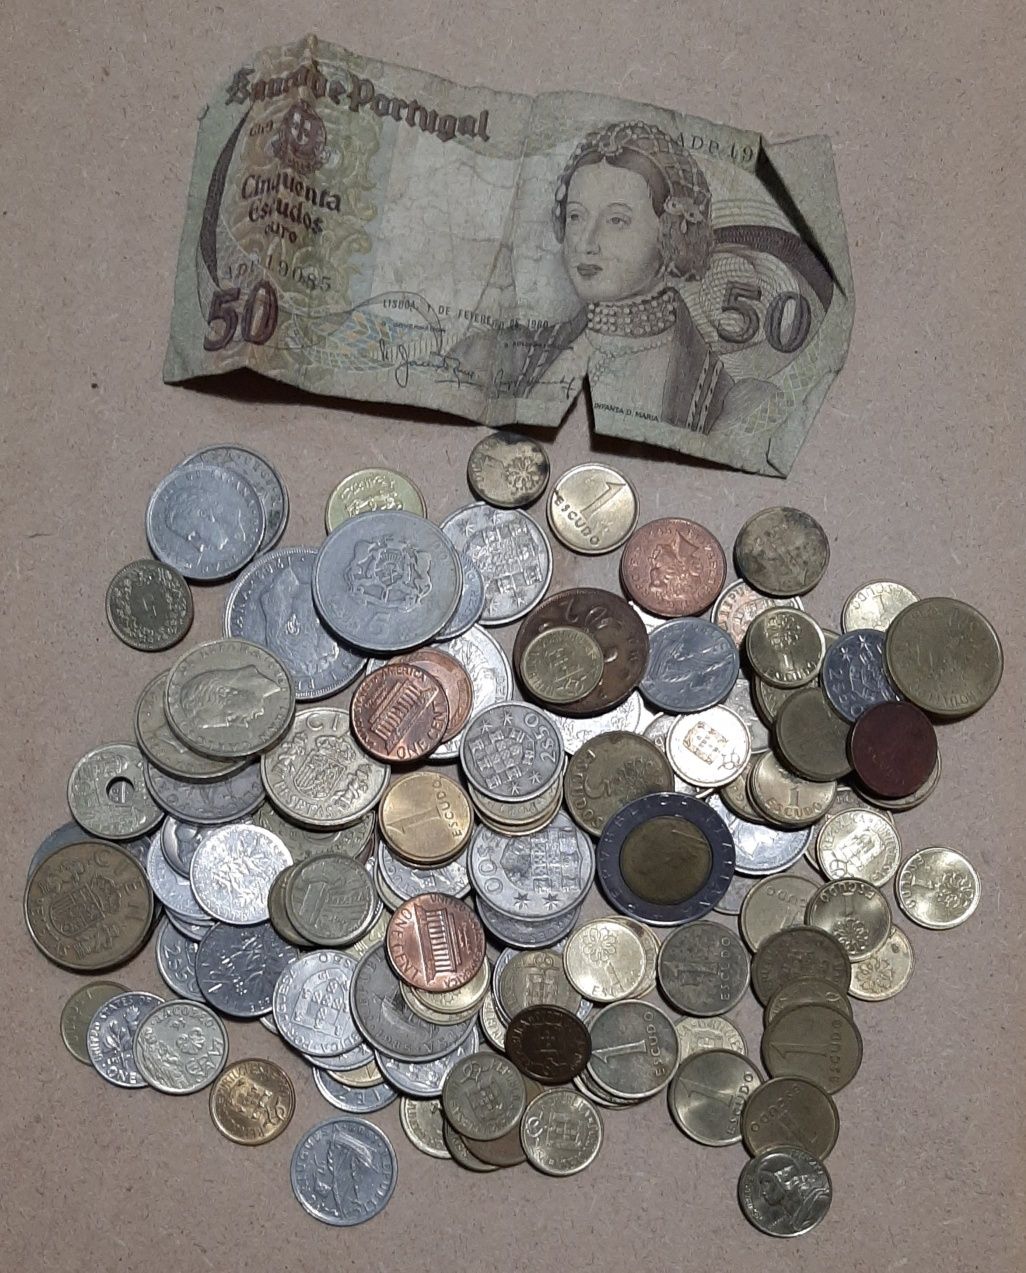 Moeda 25$ ano 1977 Portugal